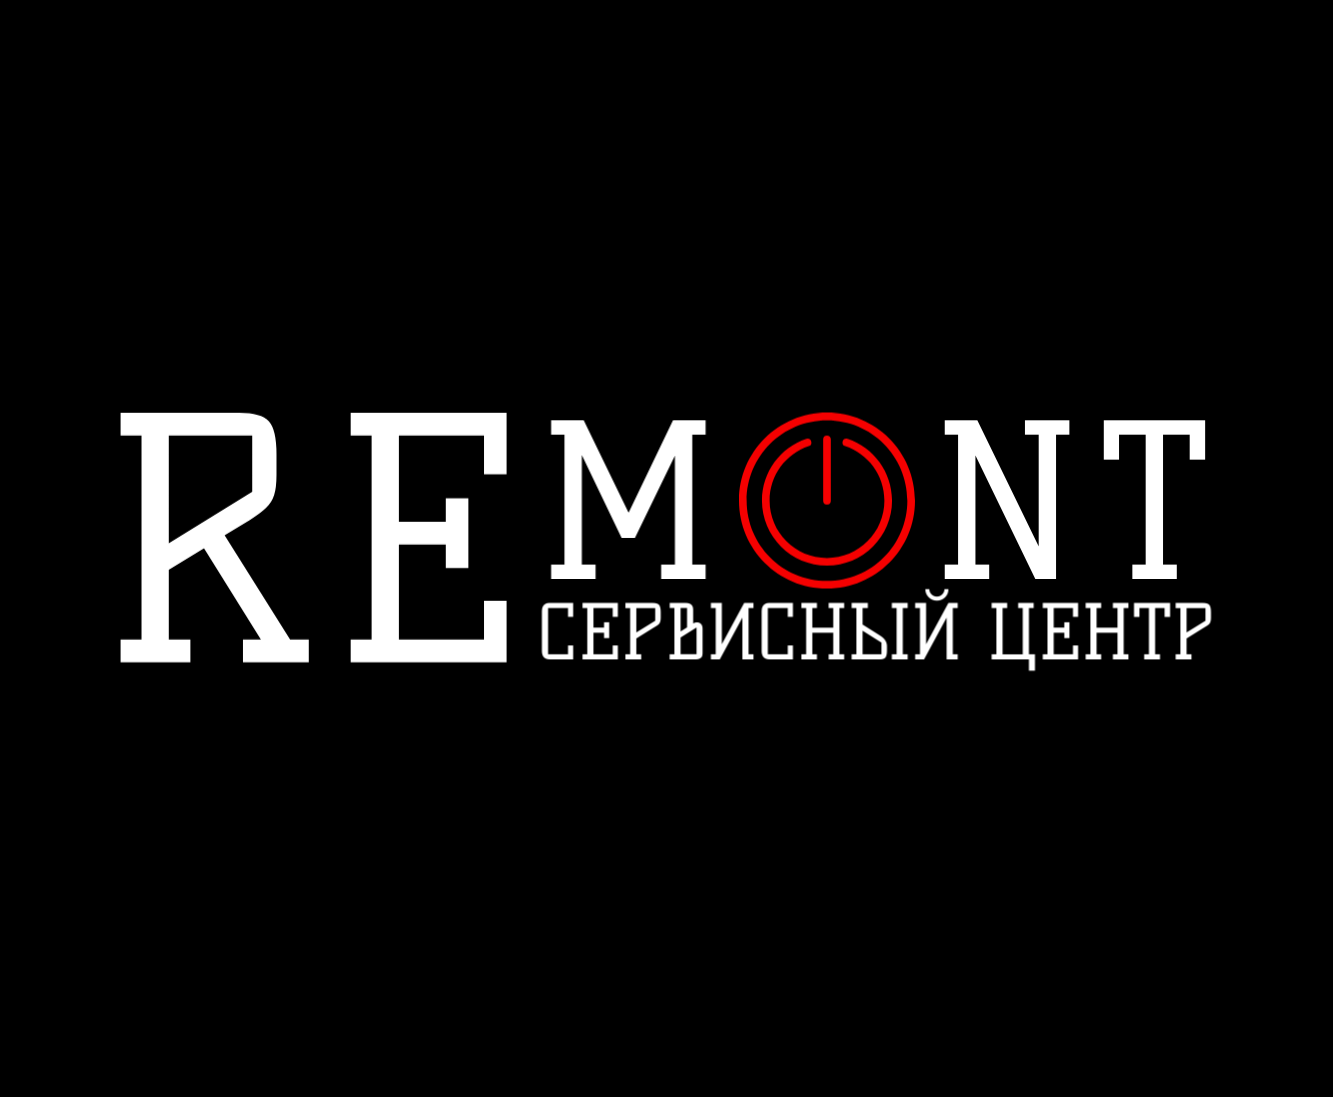 REmont